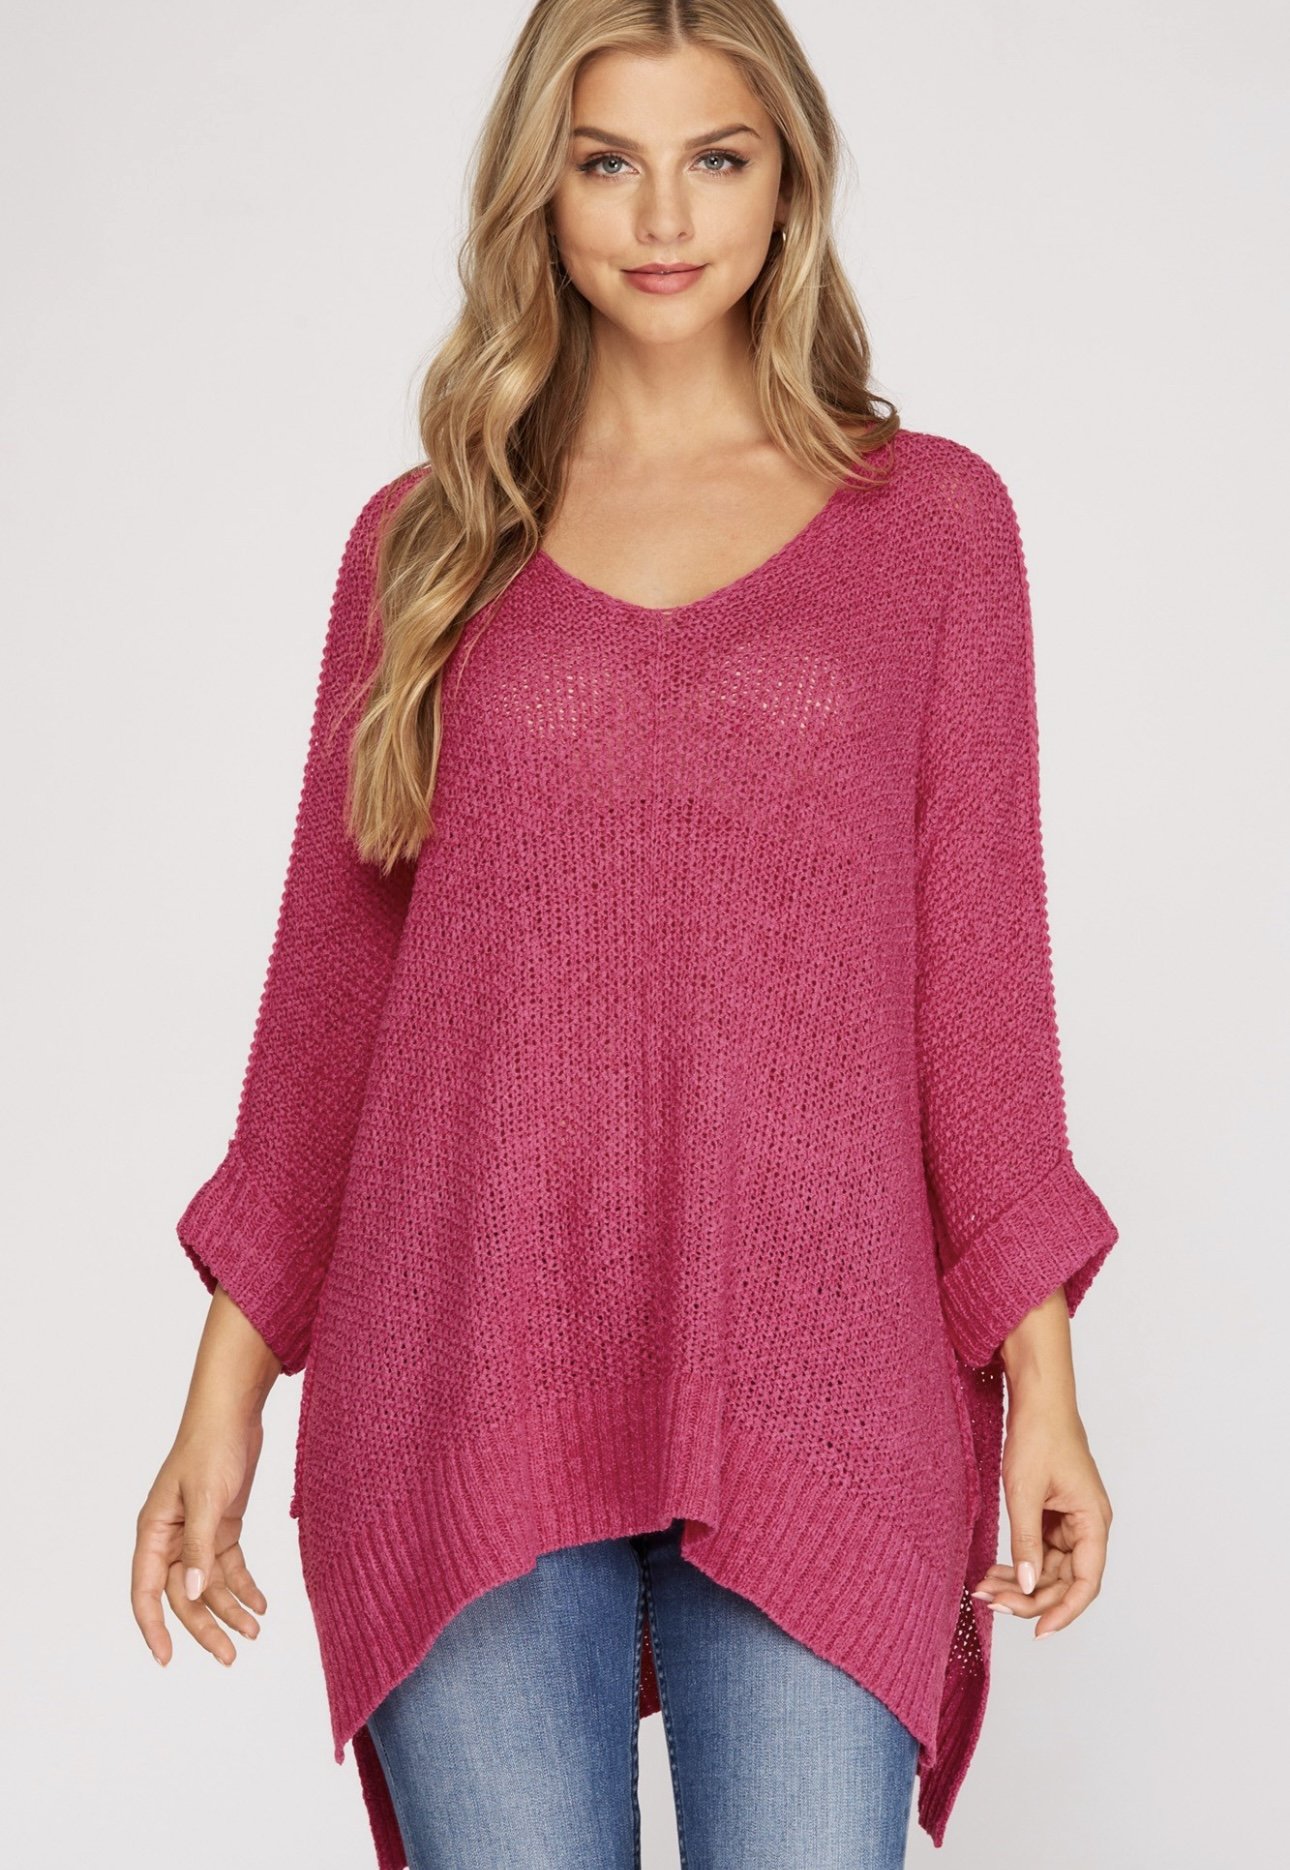 Bell Sleeve Open Knit Crochet Top, Light Taupe – Bliss & Belle Boutique